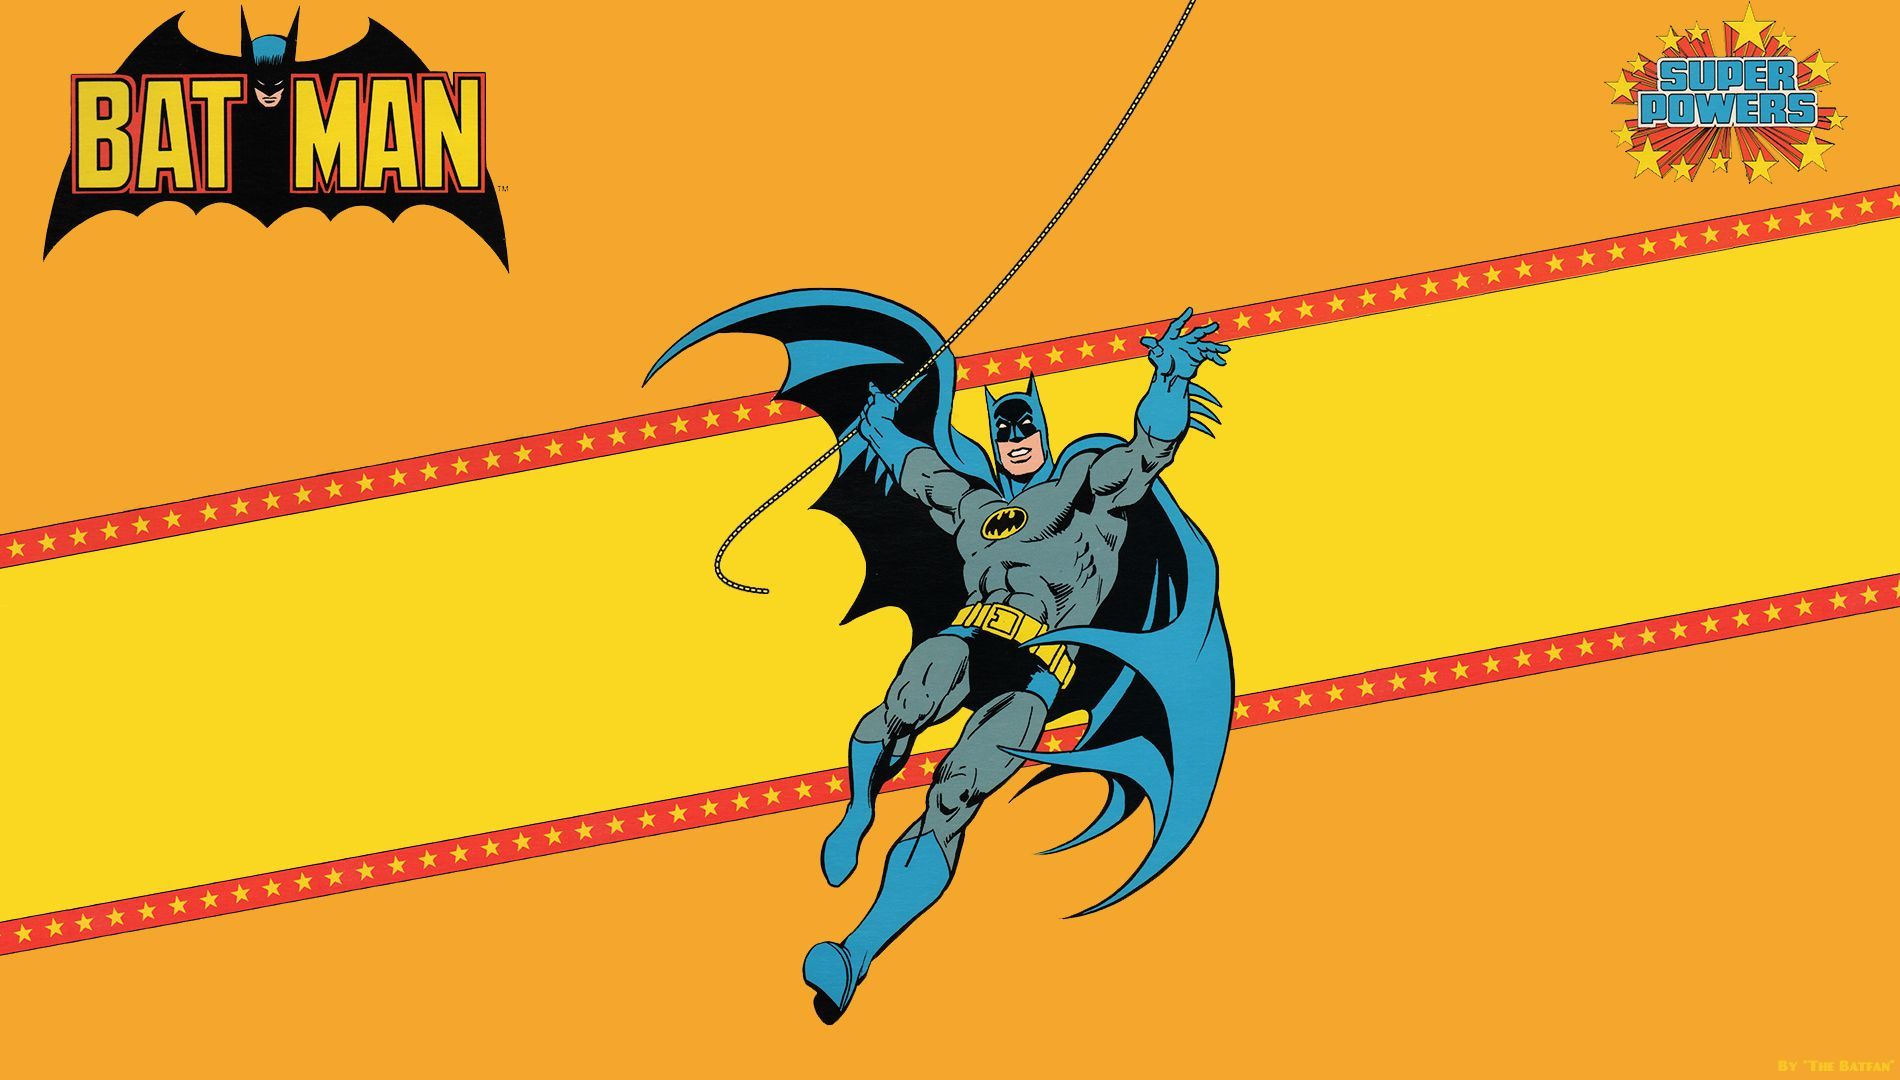 Super powers Batman wallpaper based on a coloring book cover. Batman wallpaper, Coloring books, Batman